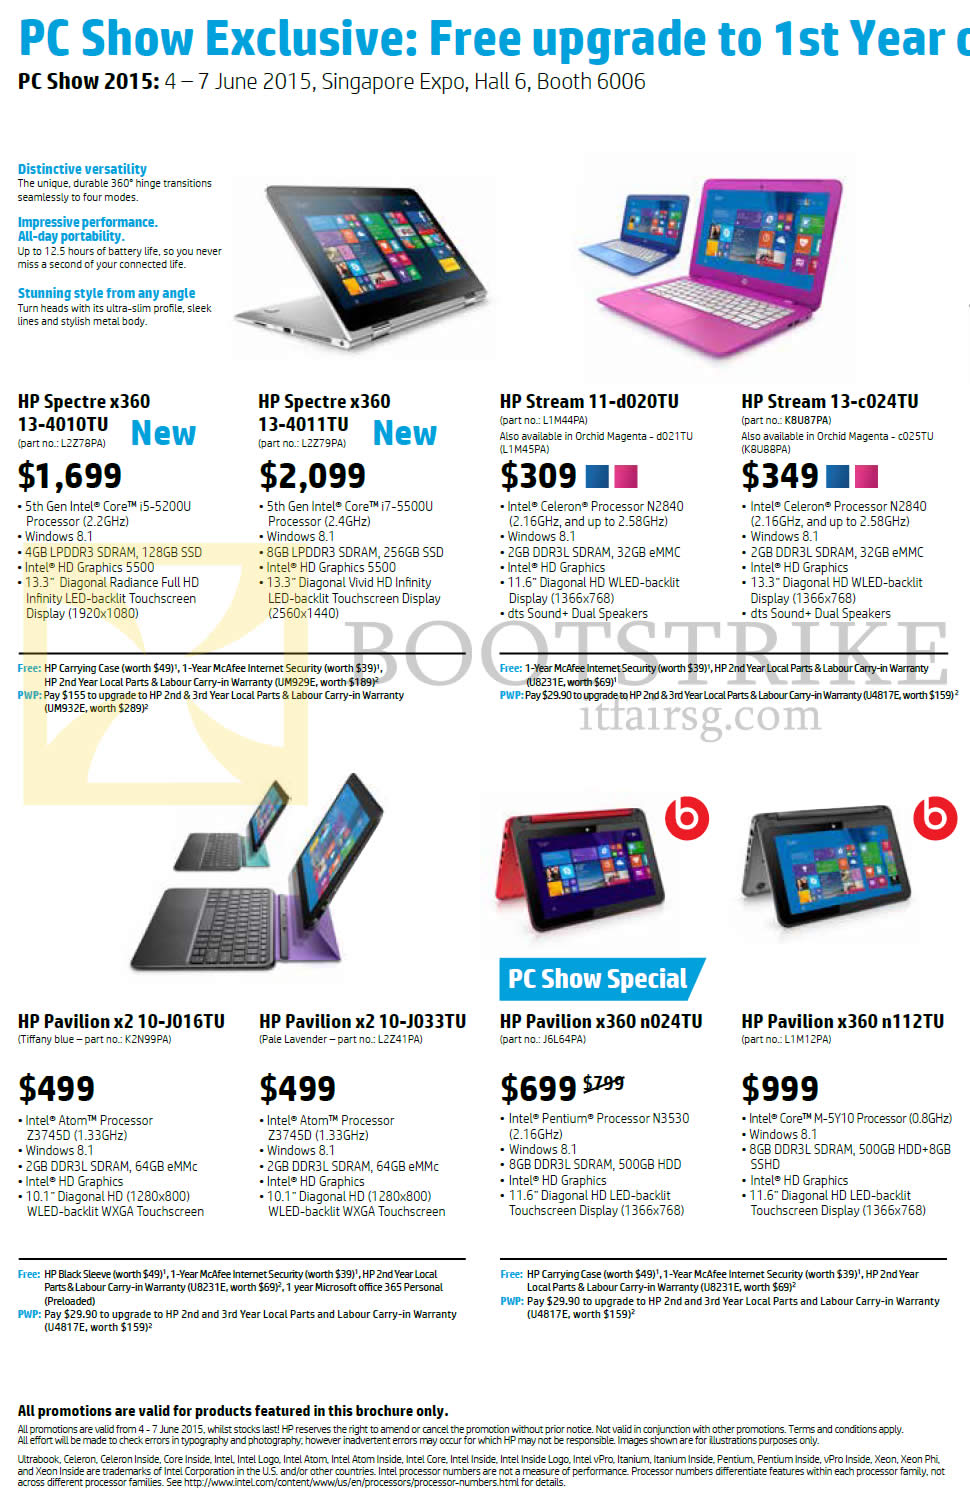 PC SHOW 2015 price list image brochure of HP Notebooks Spectre X360, Stream, Pavilion X2